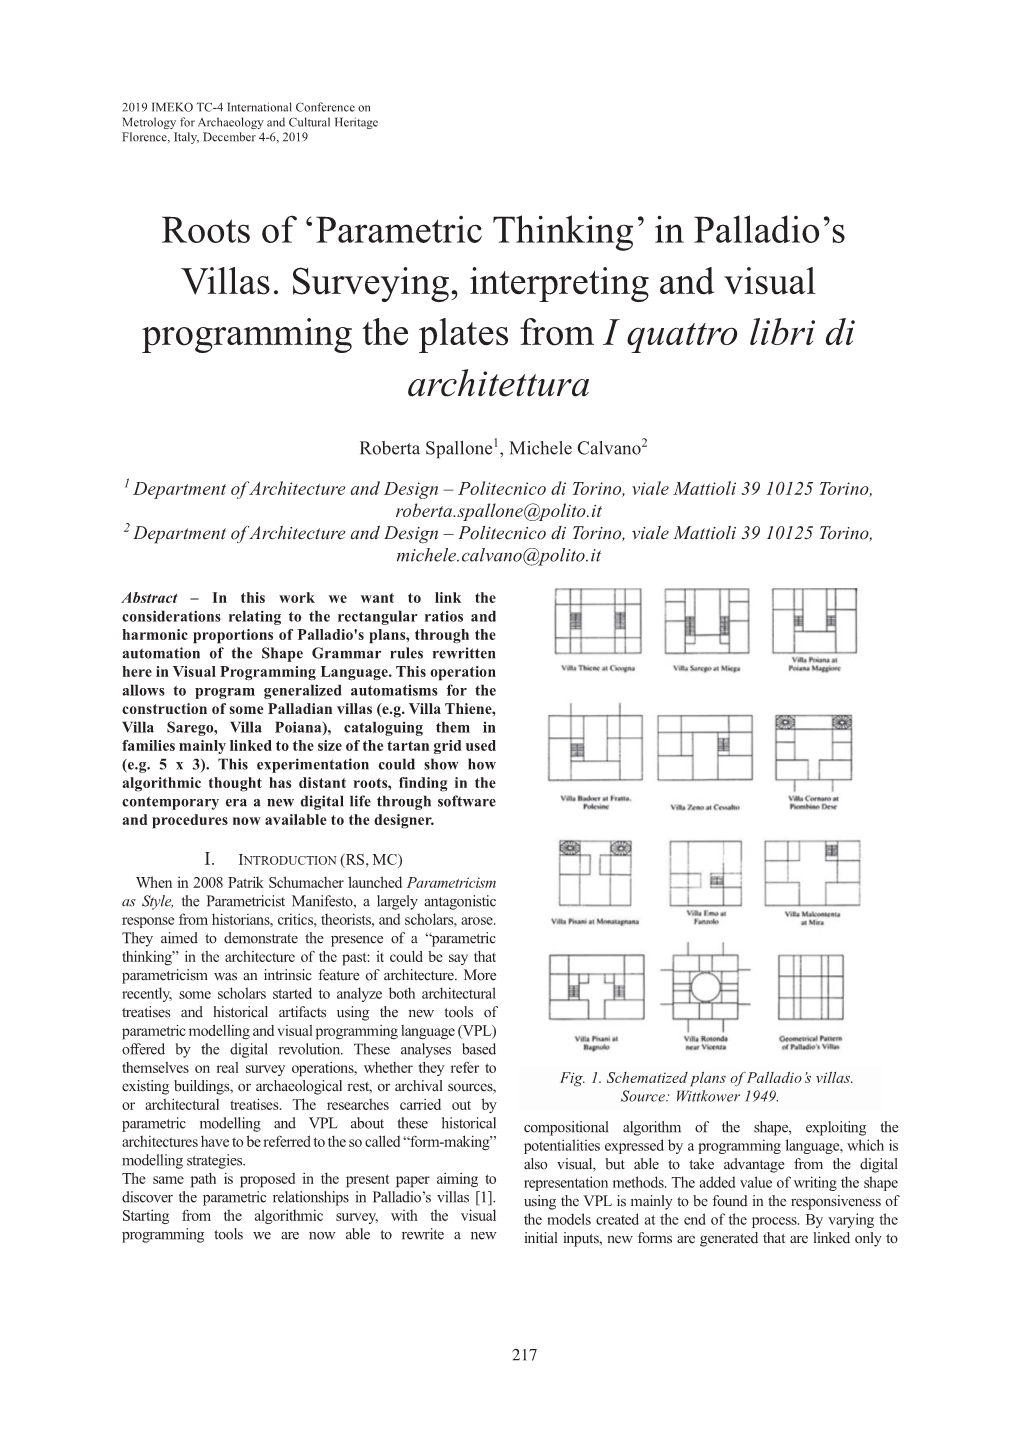 'Parametric Thinking' in Palladio's Villas. Surveying